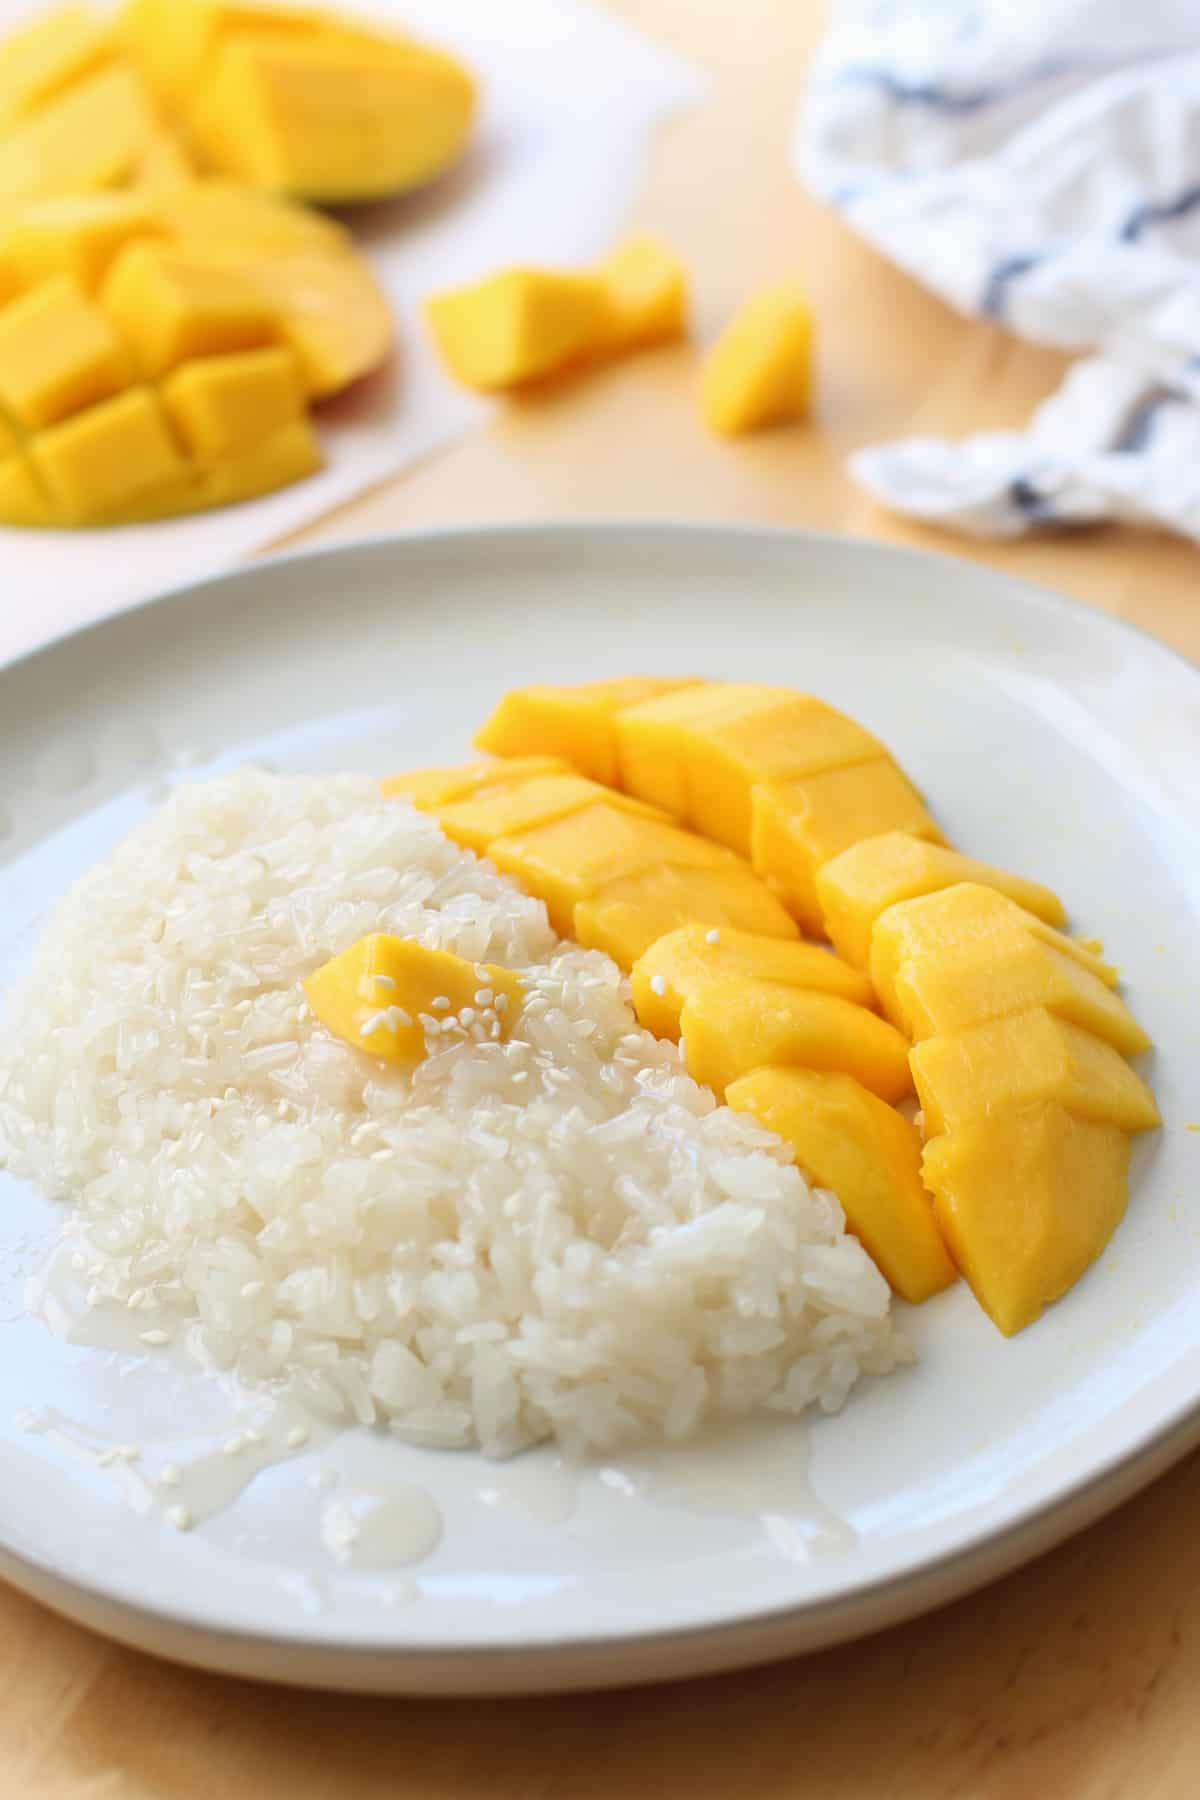 https://www.joyousapron.com/wp-content/uploads/2018/06/Mango-Sticky-Rice-Pic-2.jpg